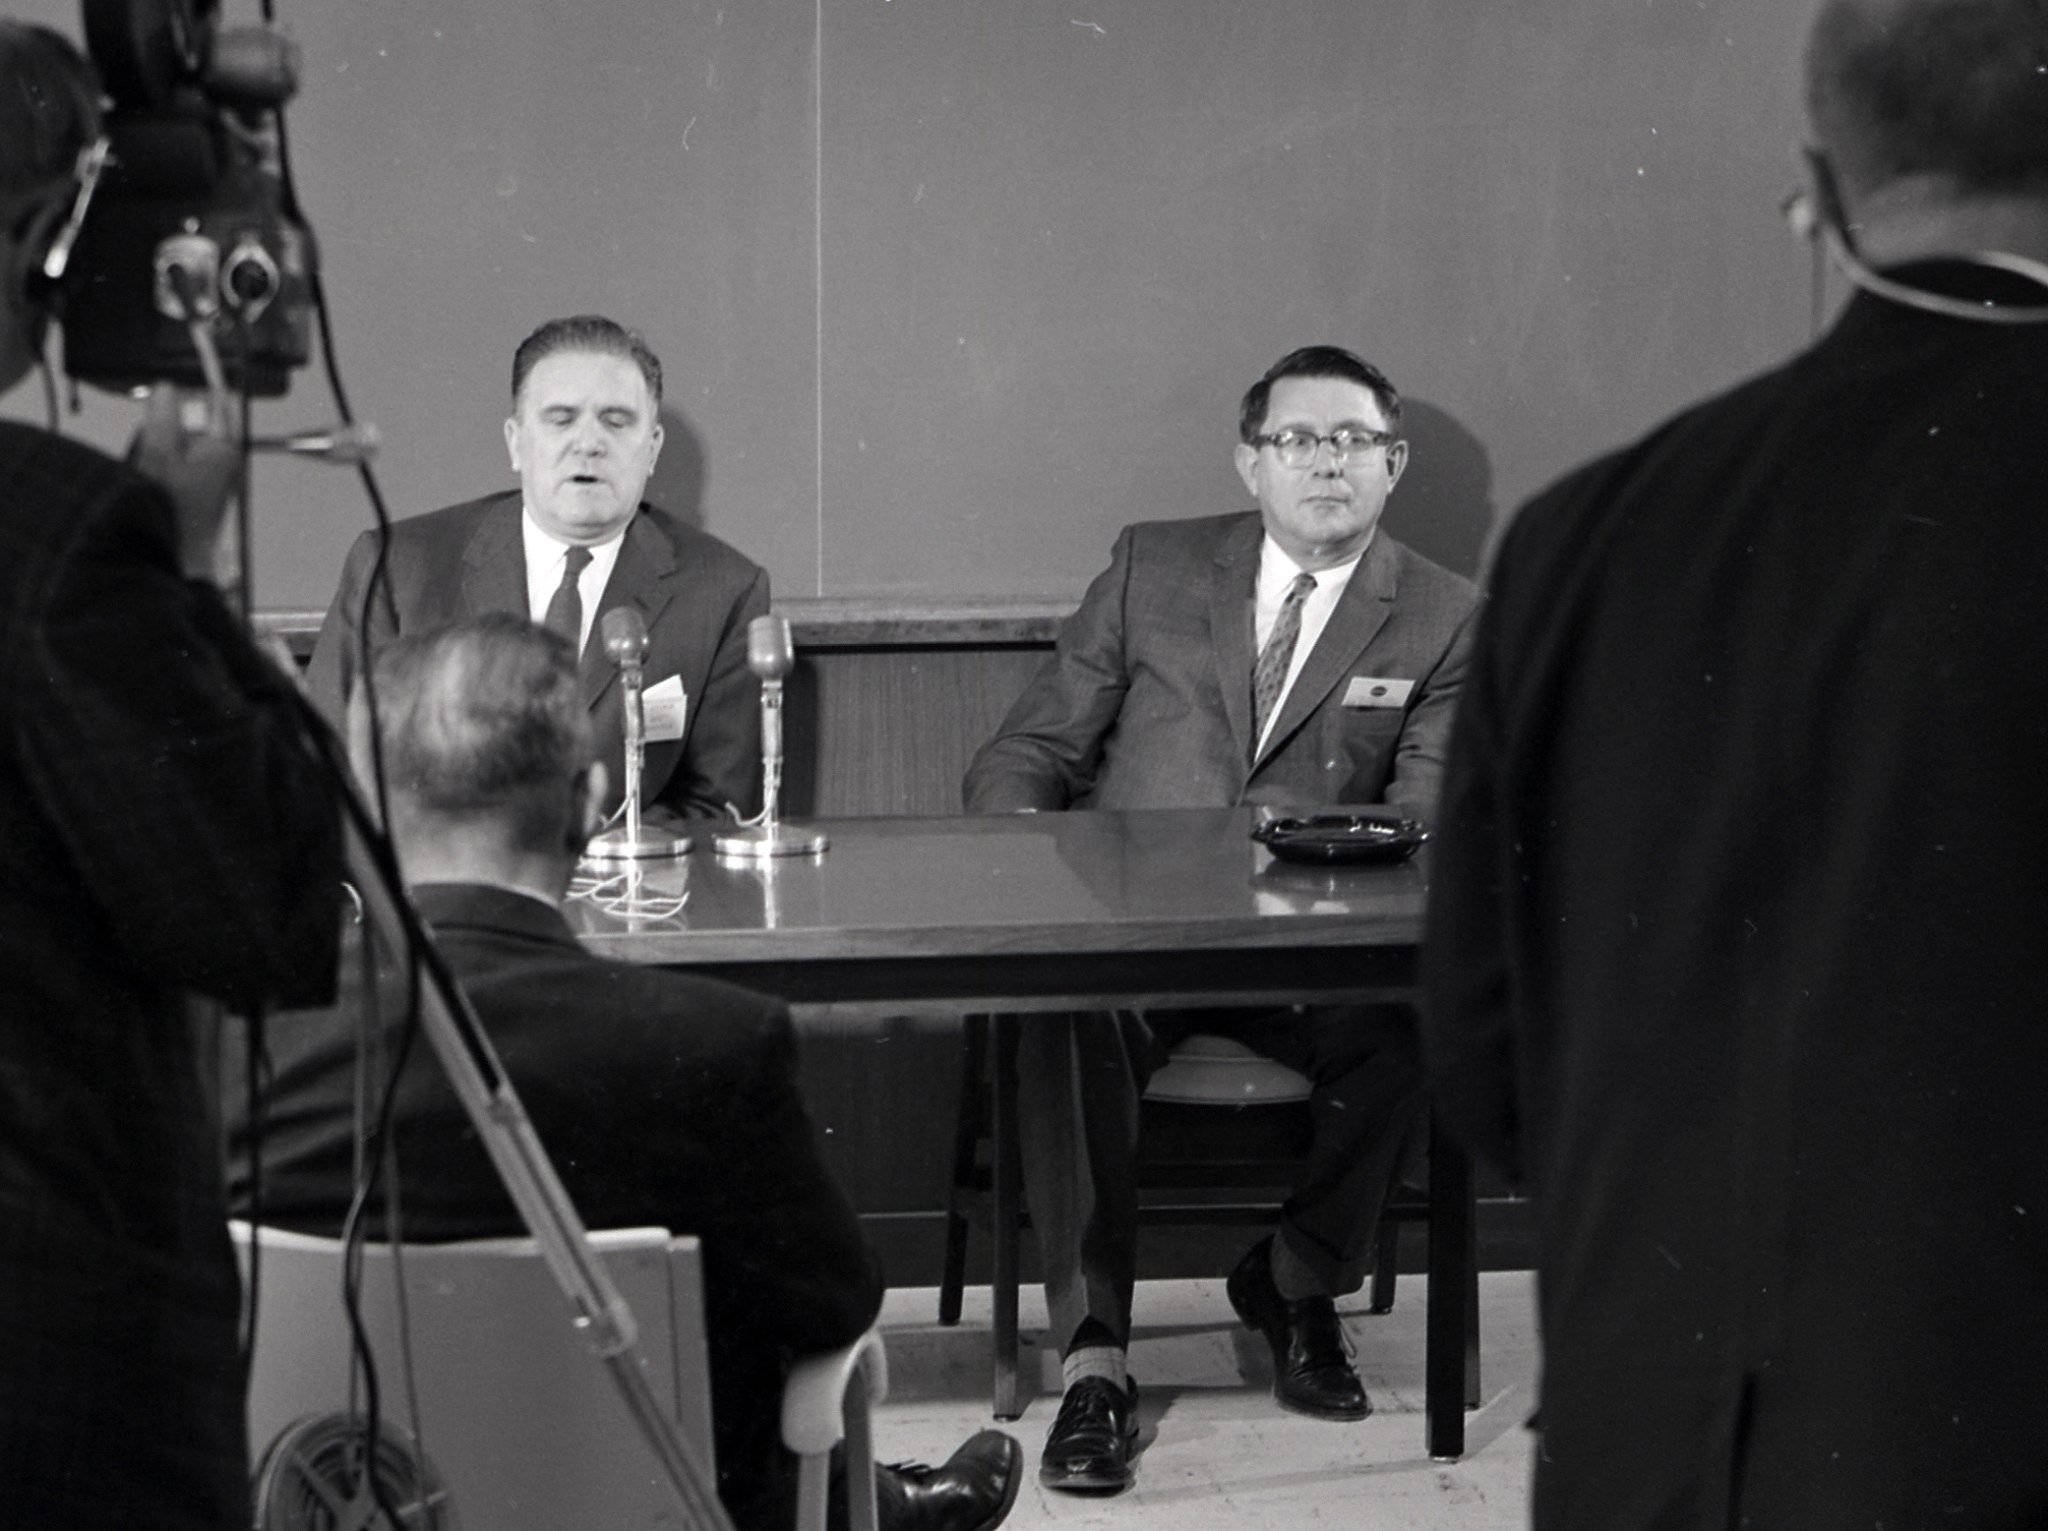 Two men at desk facing cameras.